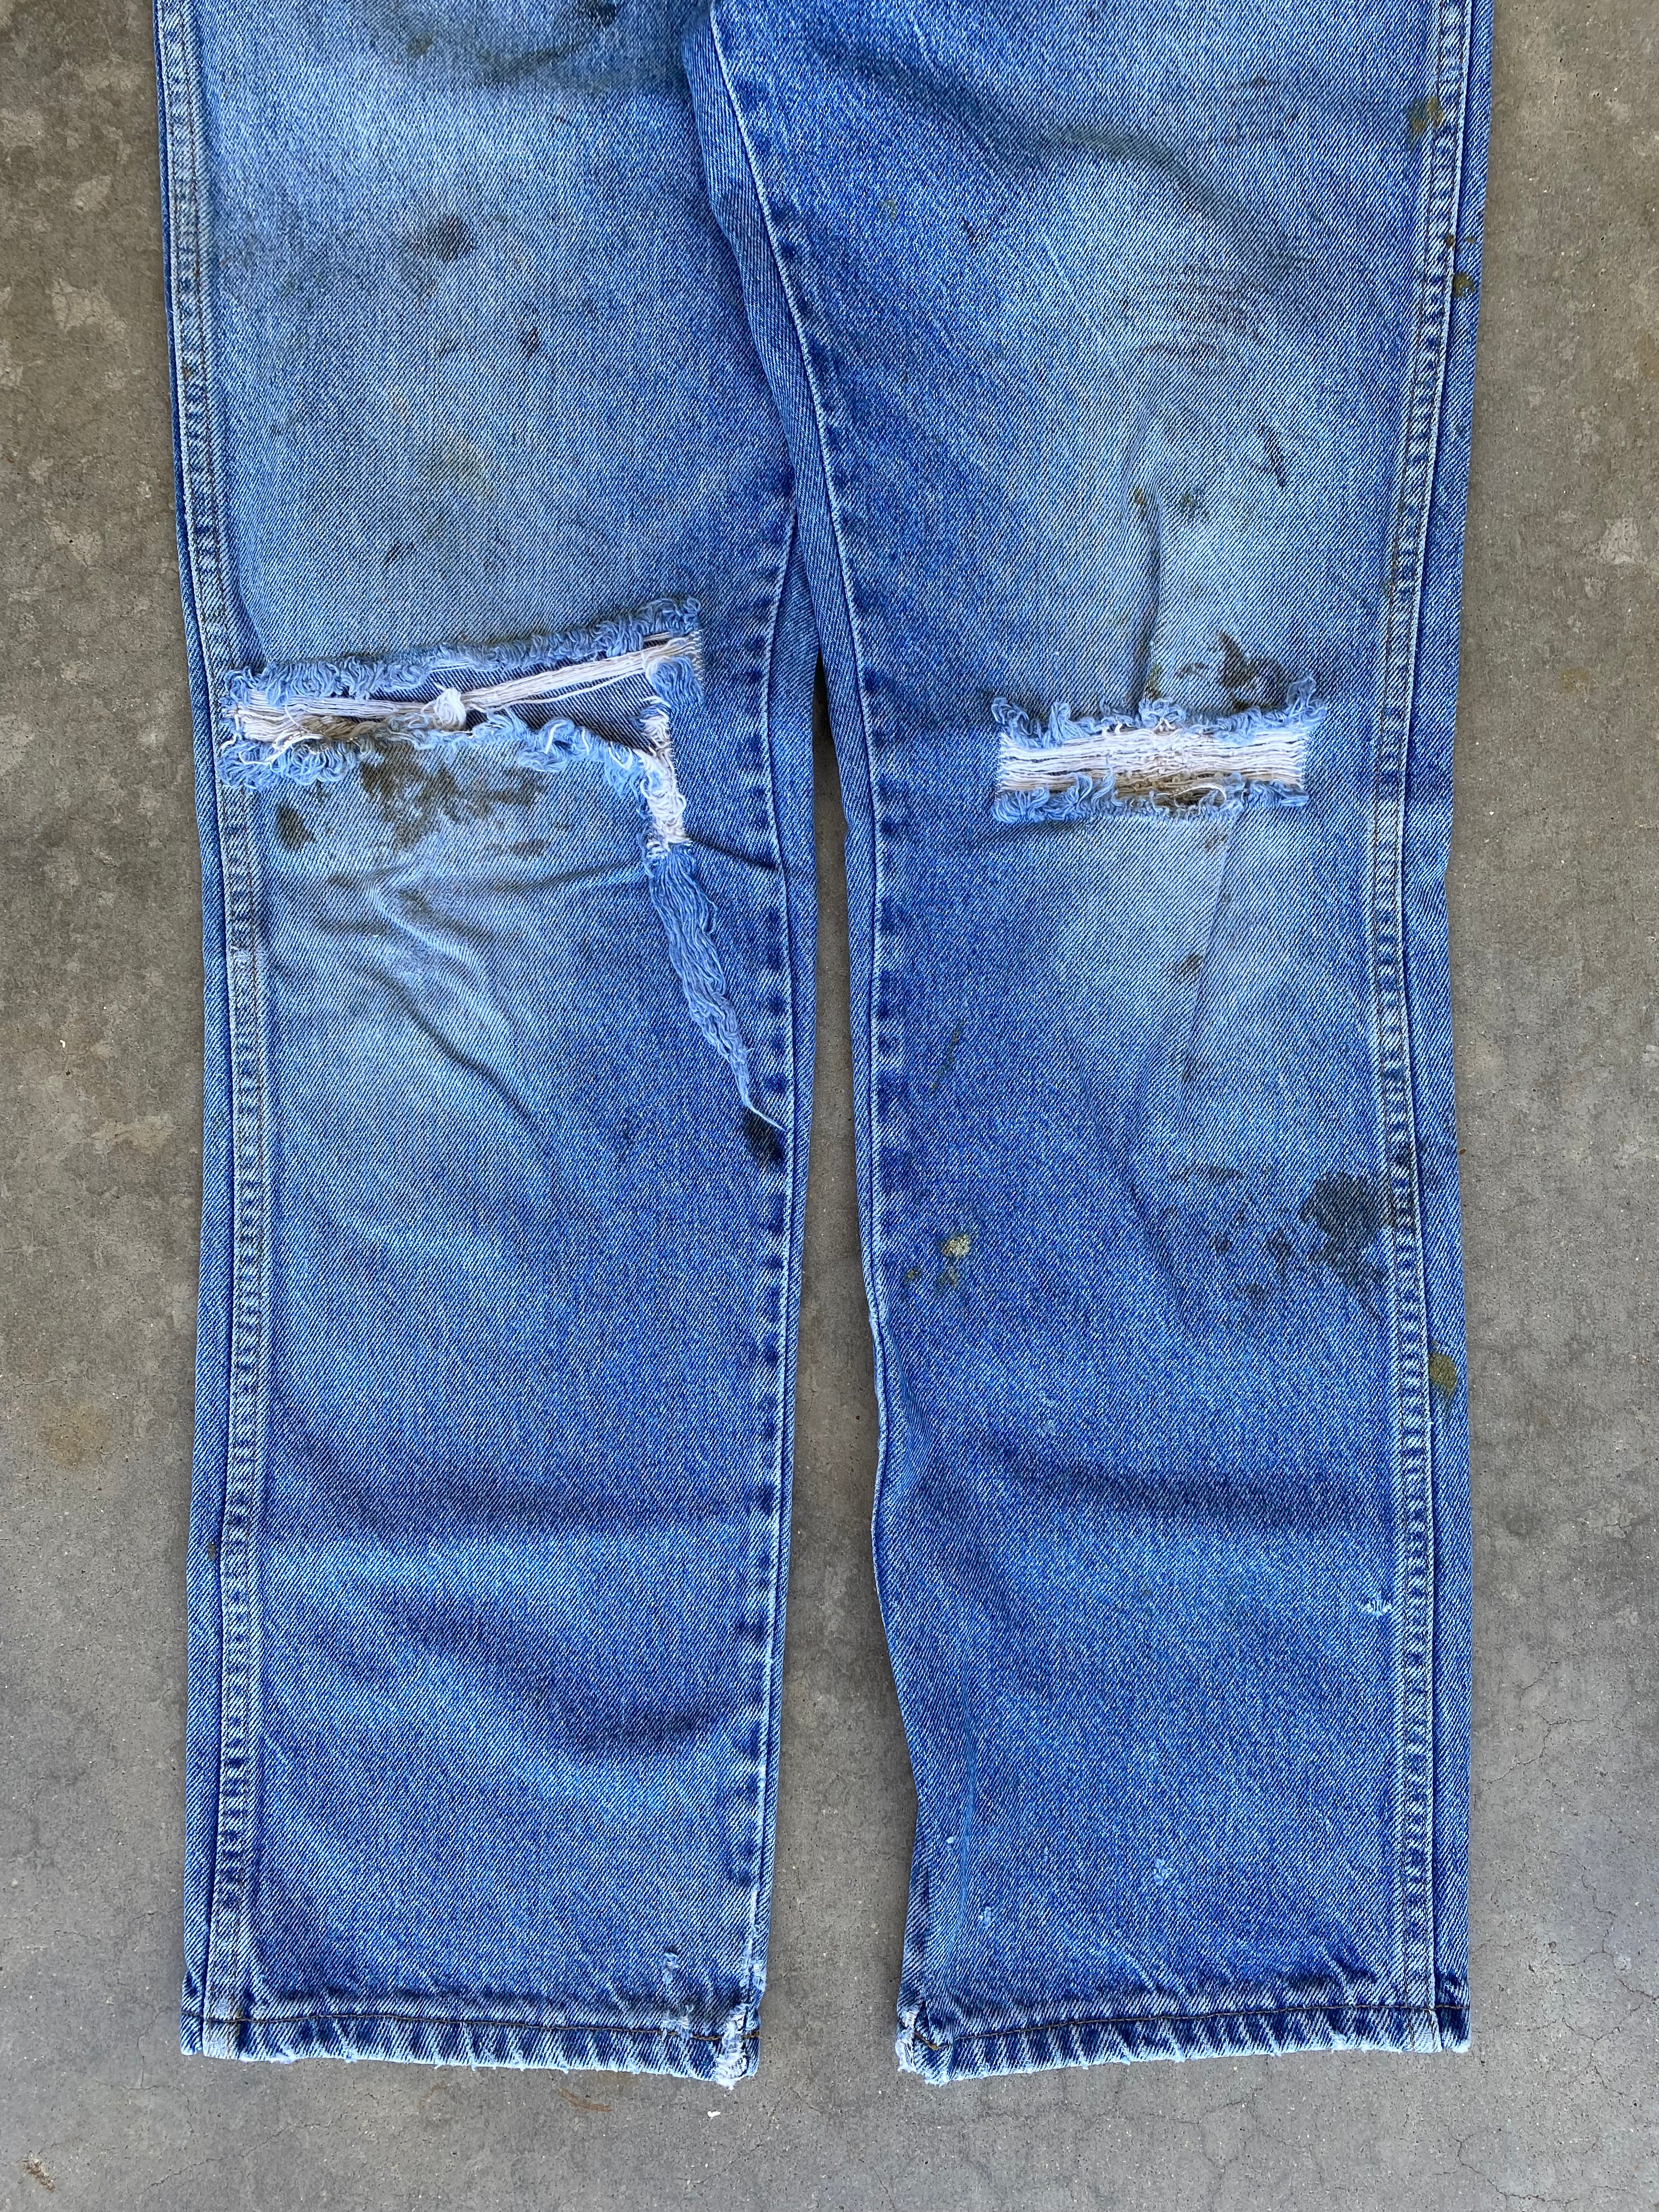 Vintage Rustler Distressed/Worn Jeans (31"x30.5)